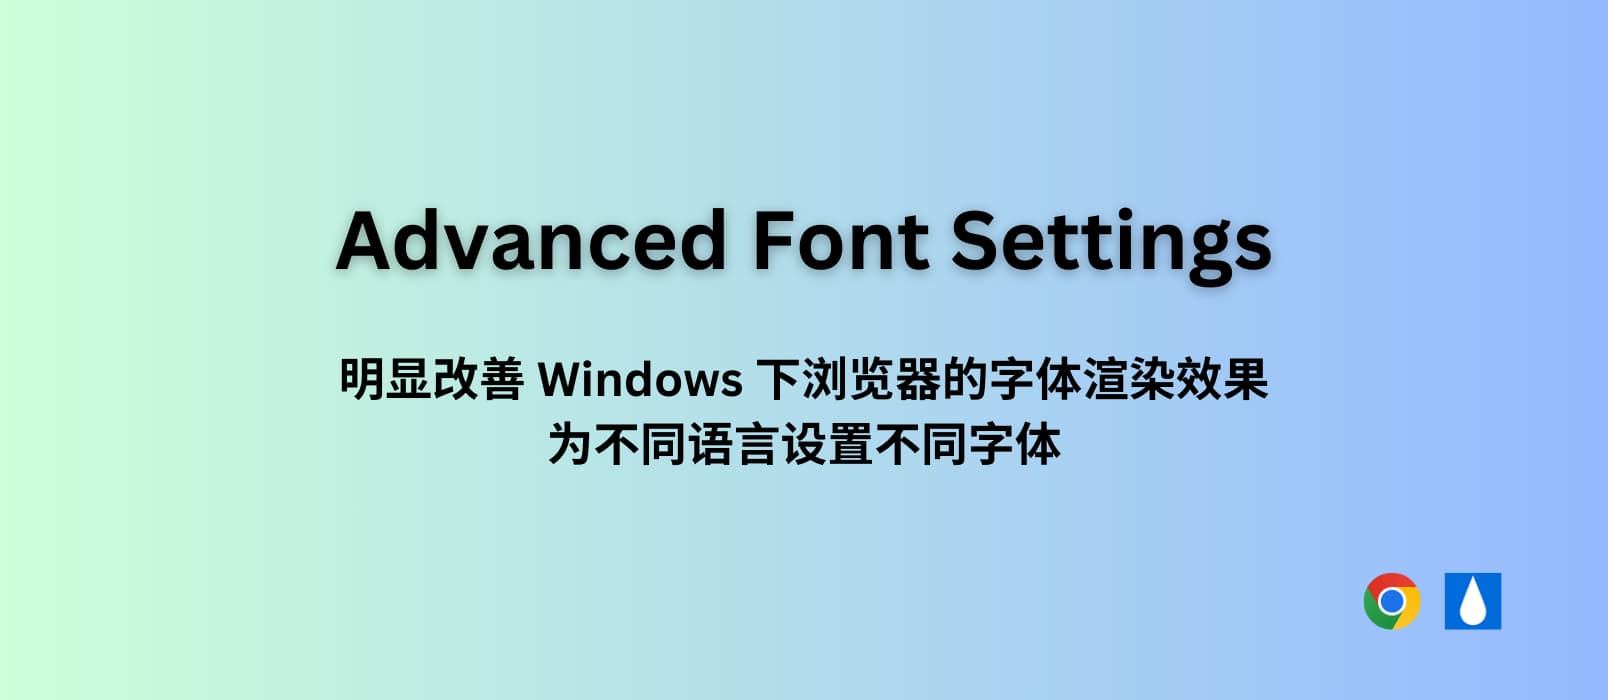 Advanced Font Settings - 明显改善 Windows 下浏览器的字体渲染效果，为不同语言设置不同字体[Chrome] 1